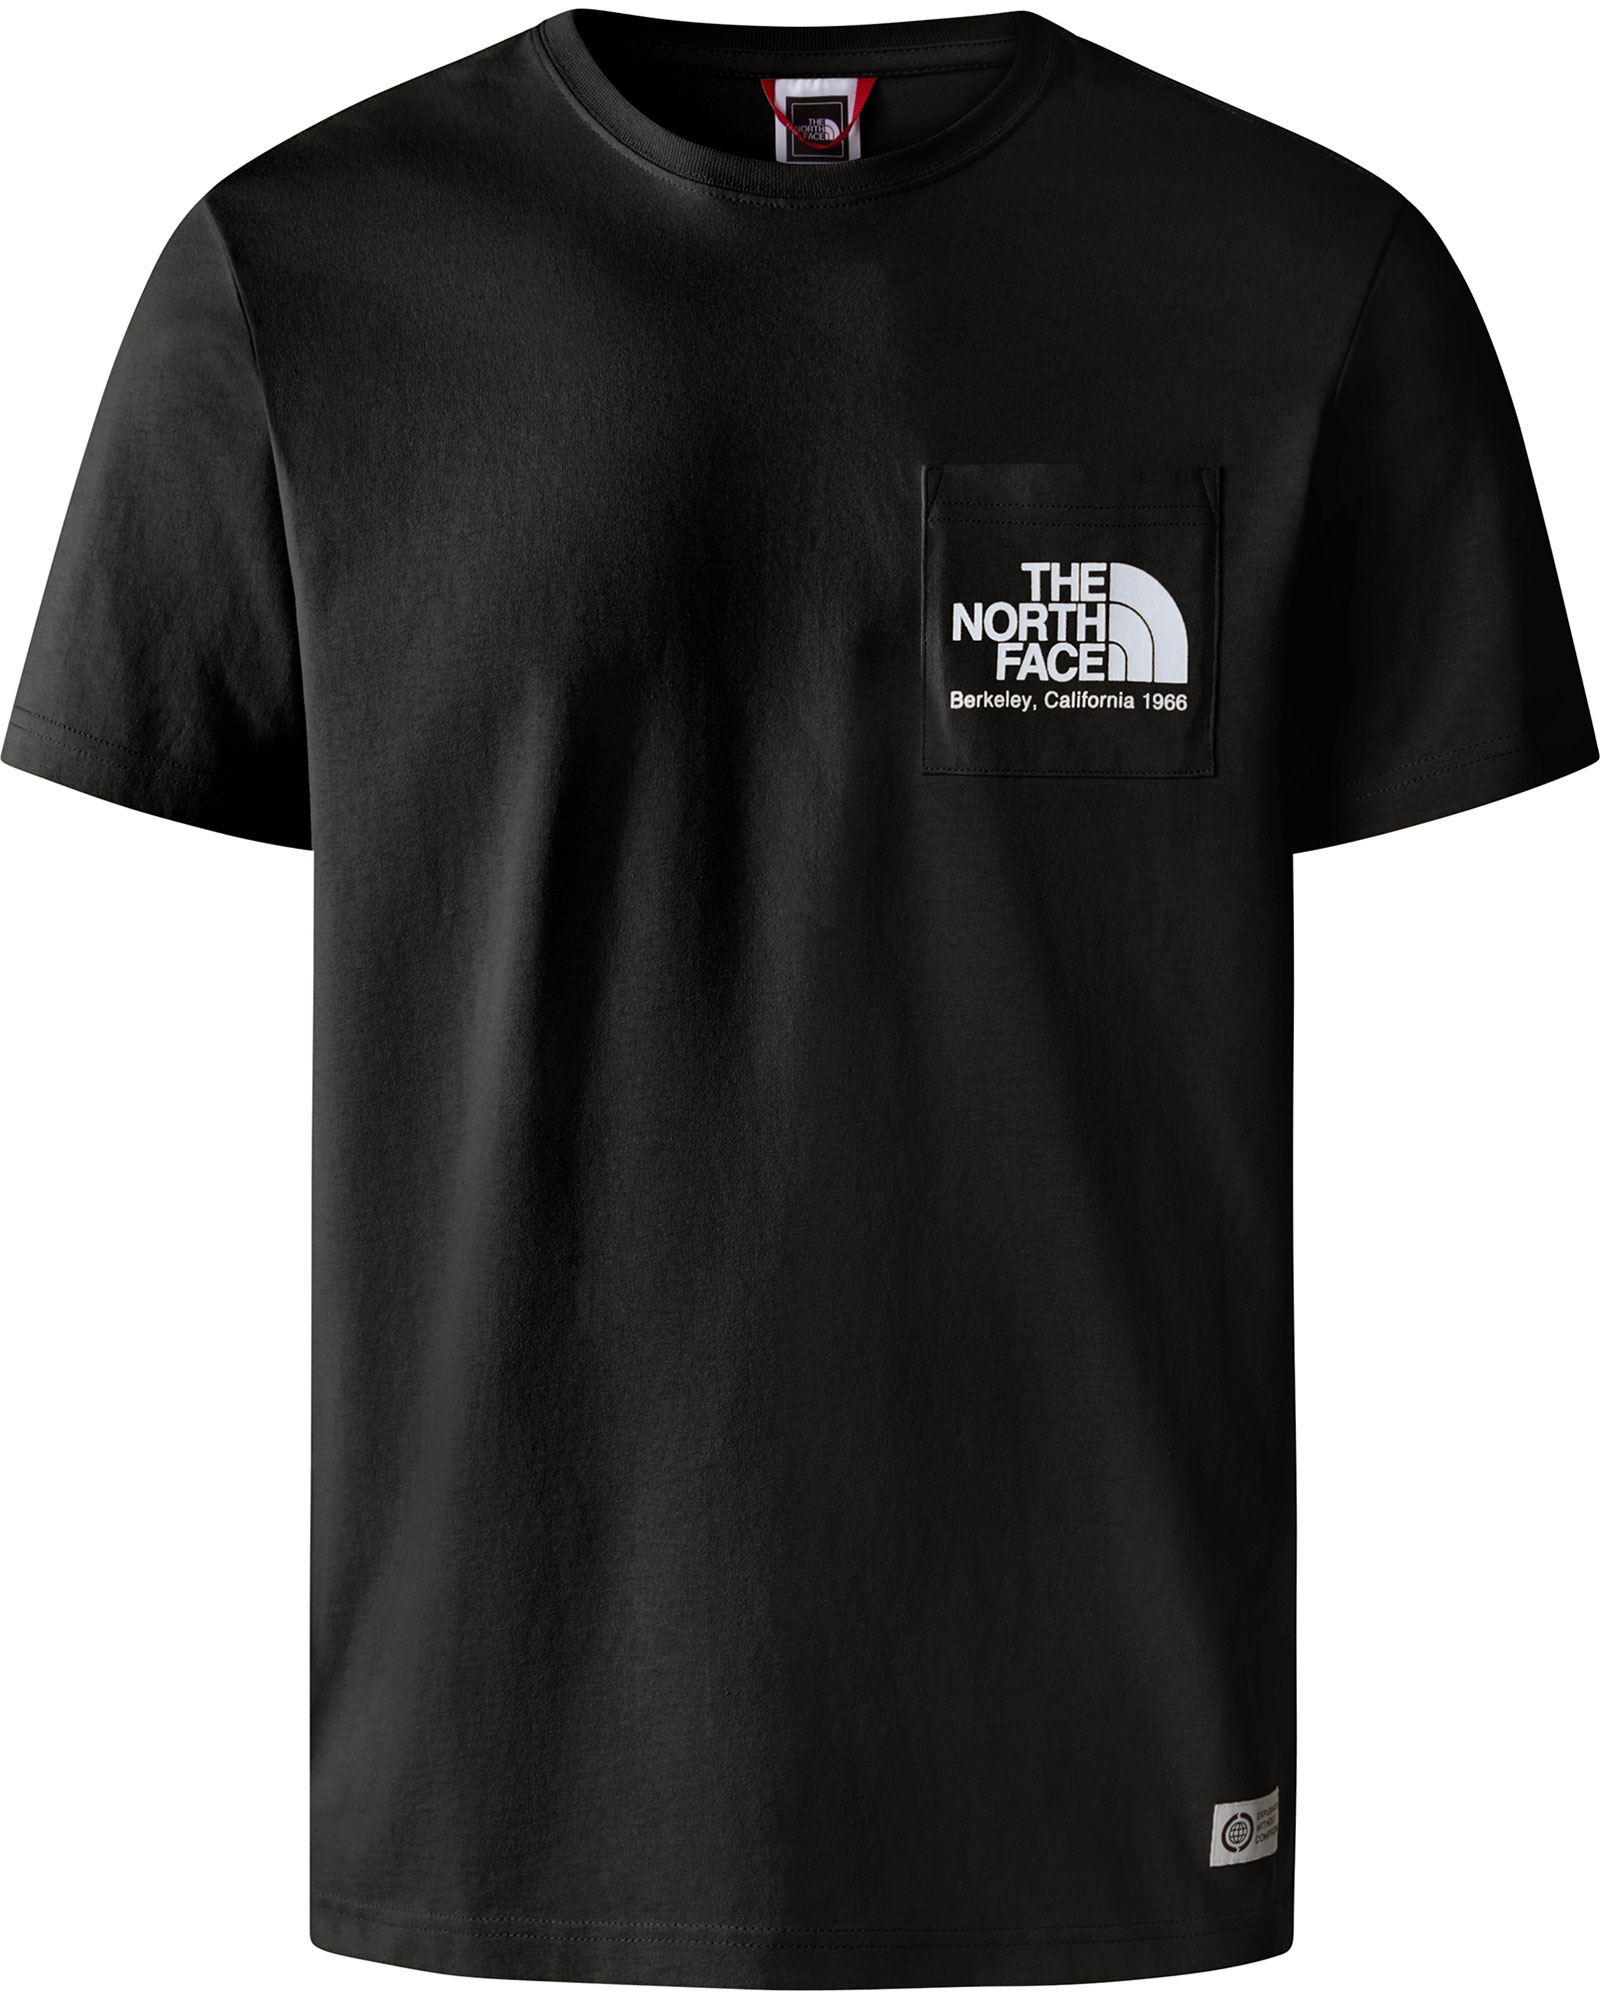 The North Face Men’s Berkeley California Pocket T Shirt - TNF Black M